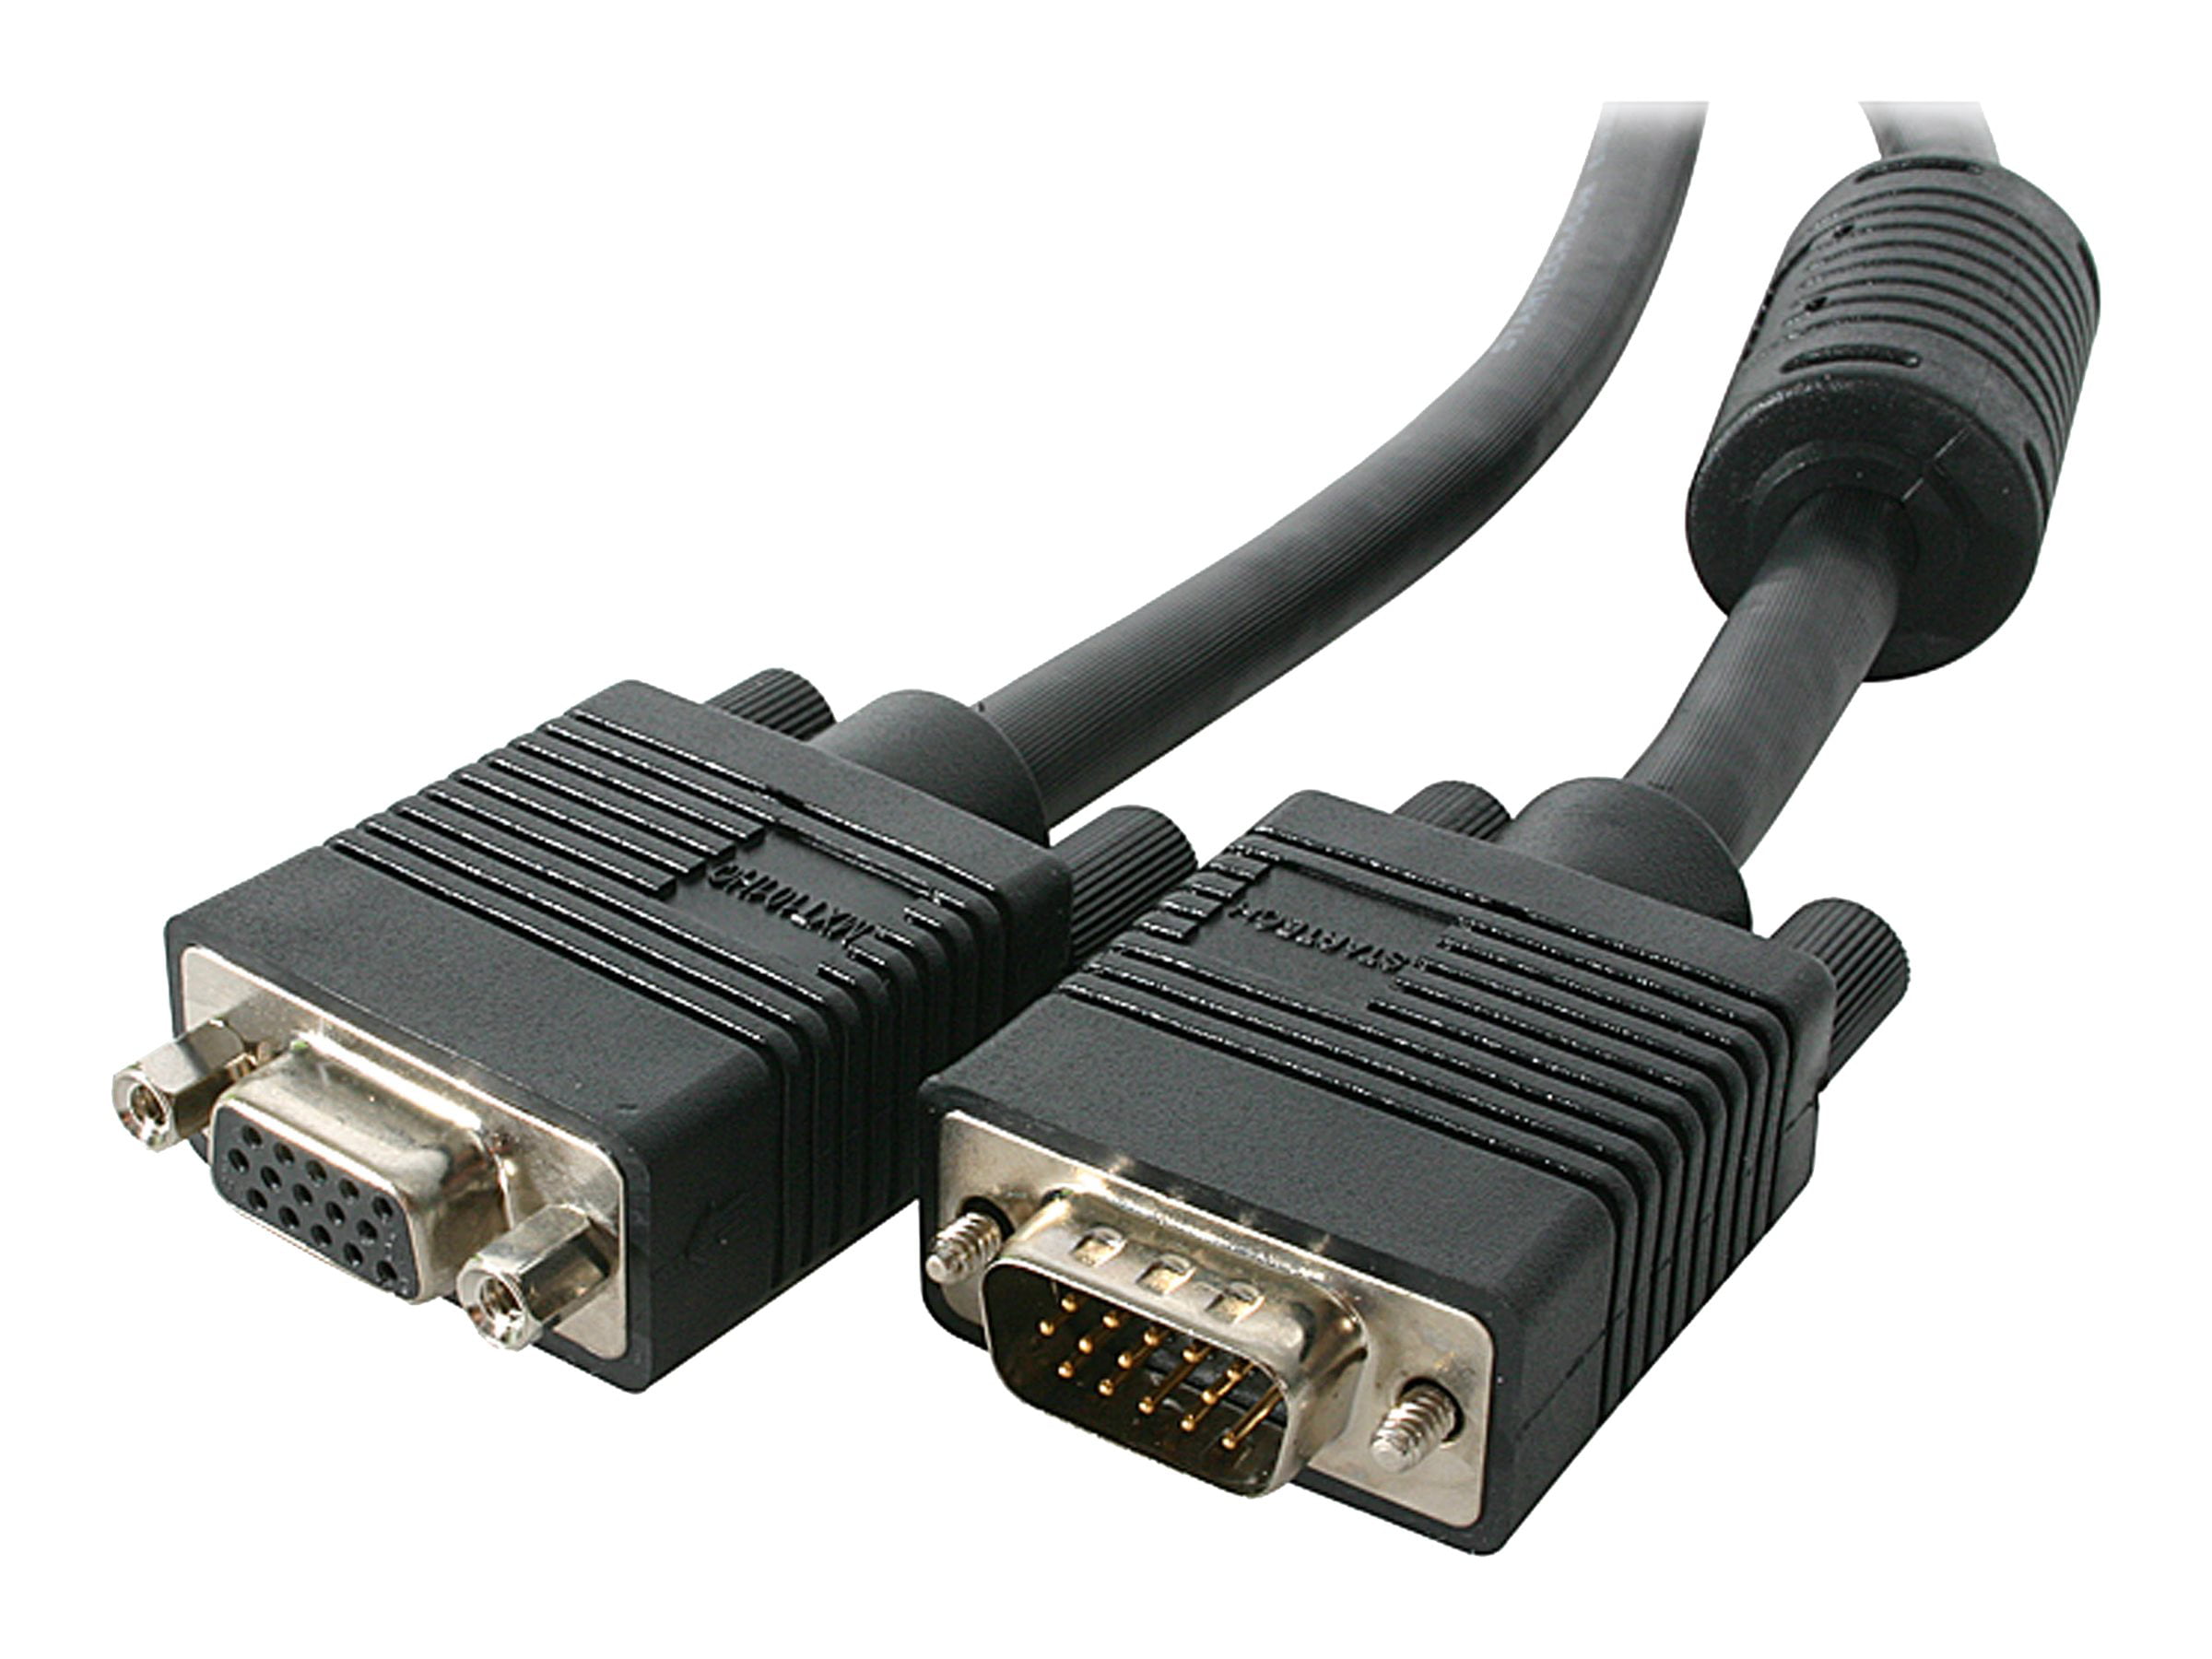 / P502-020 / TRIPP LITE 20-ft SVGA/VGA Monitor Gold Cable with RGB Coax HD15 M/M 